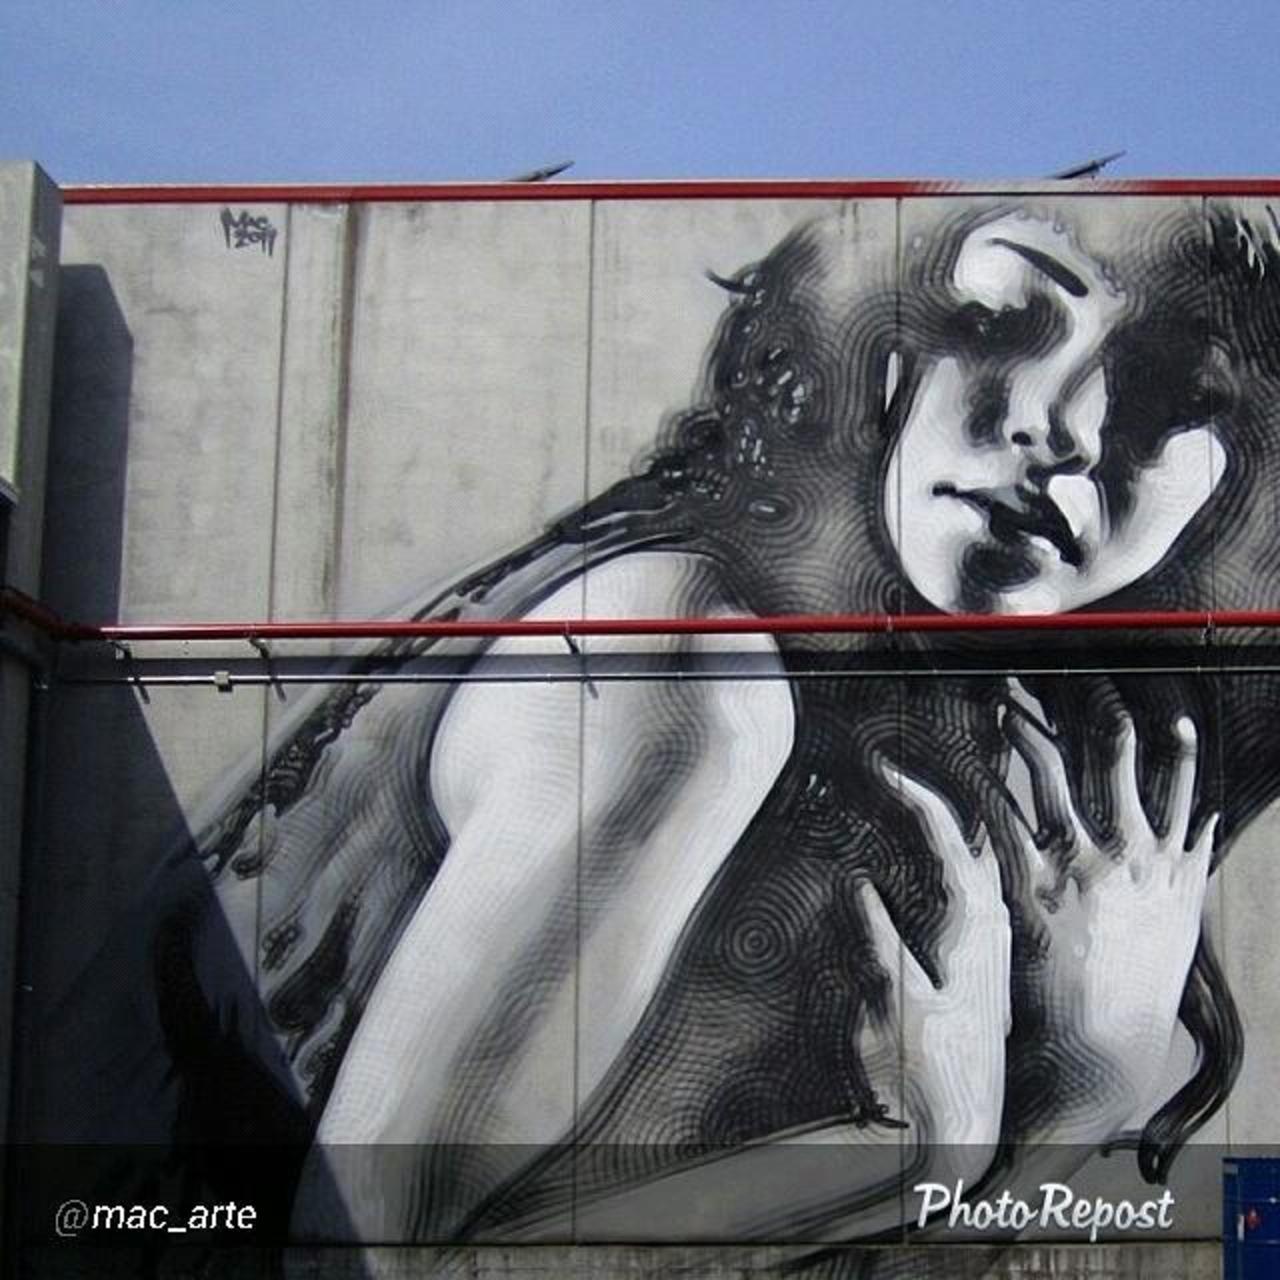 “@UffiziGraffiti: I love this guys work! By El Mac . #streetart #mural #graffiti #art #urbanart http://t.co/DKL4tpGMjp”